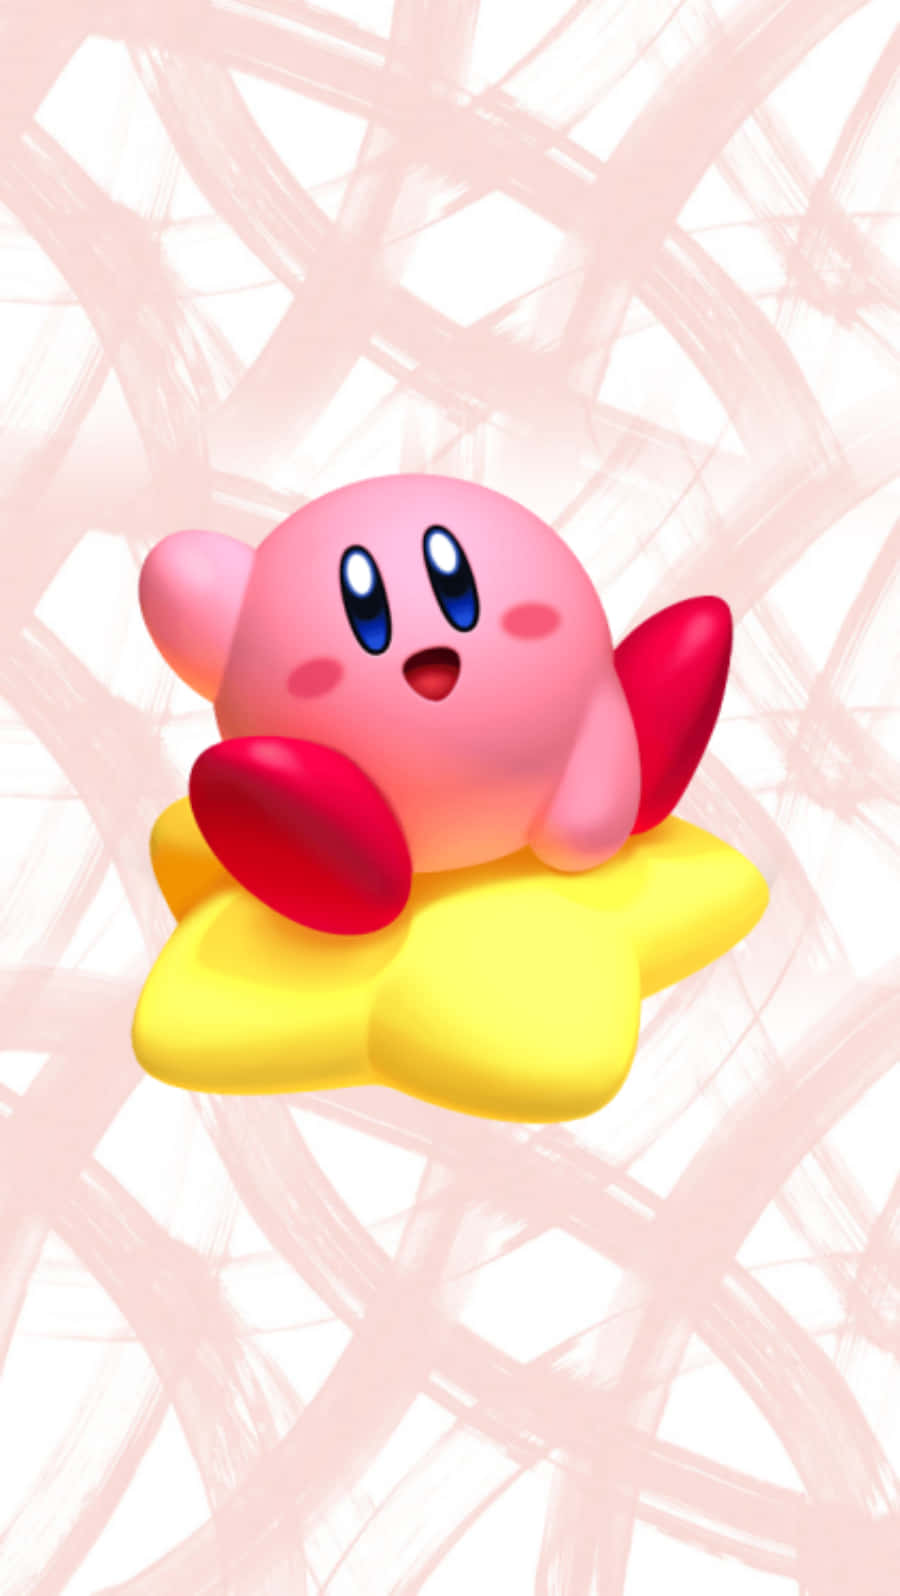 Sepå Denne Søde Kirby-karakter!